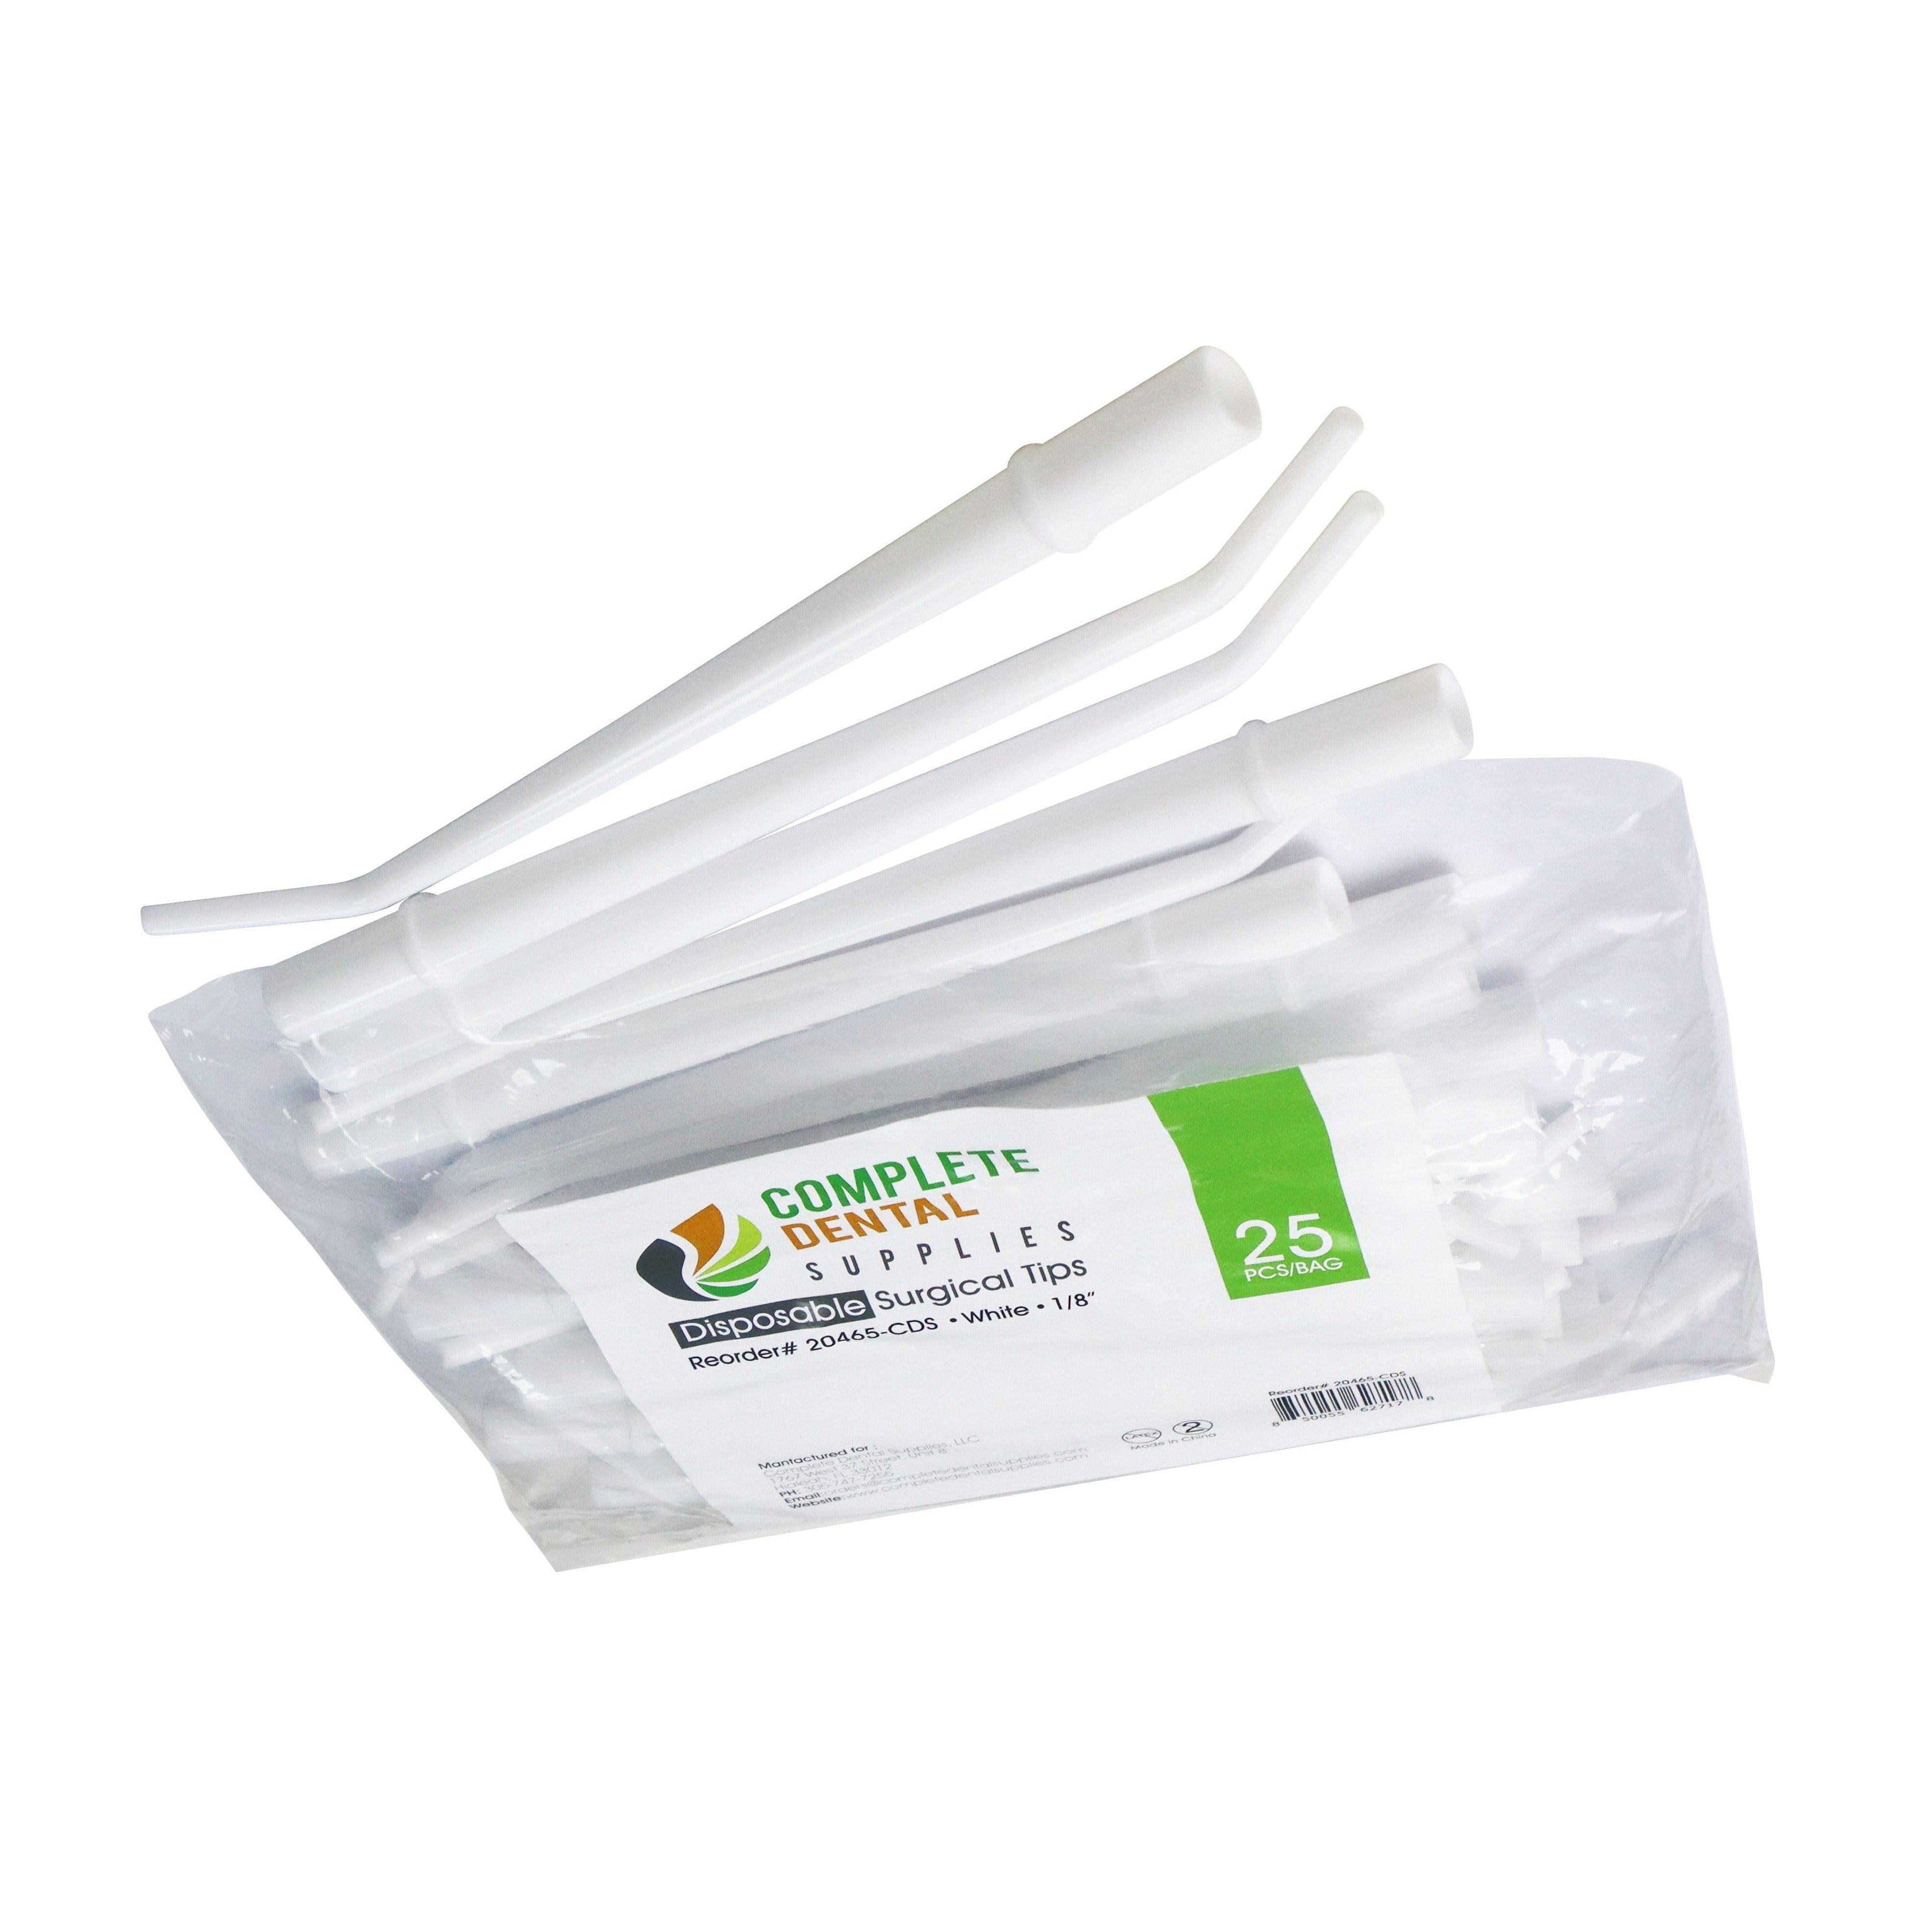 Disposable Surgical Tips 1/8”, White, 25 pcs / Bag.